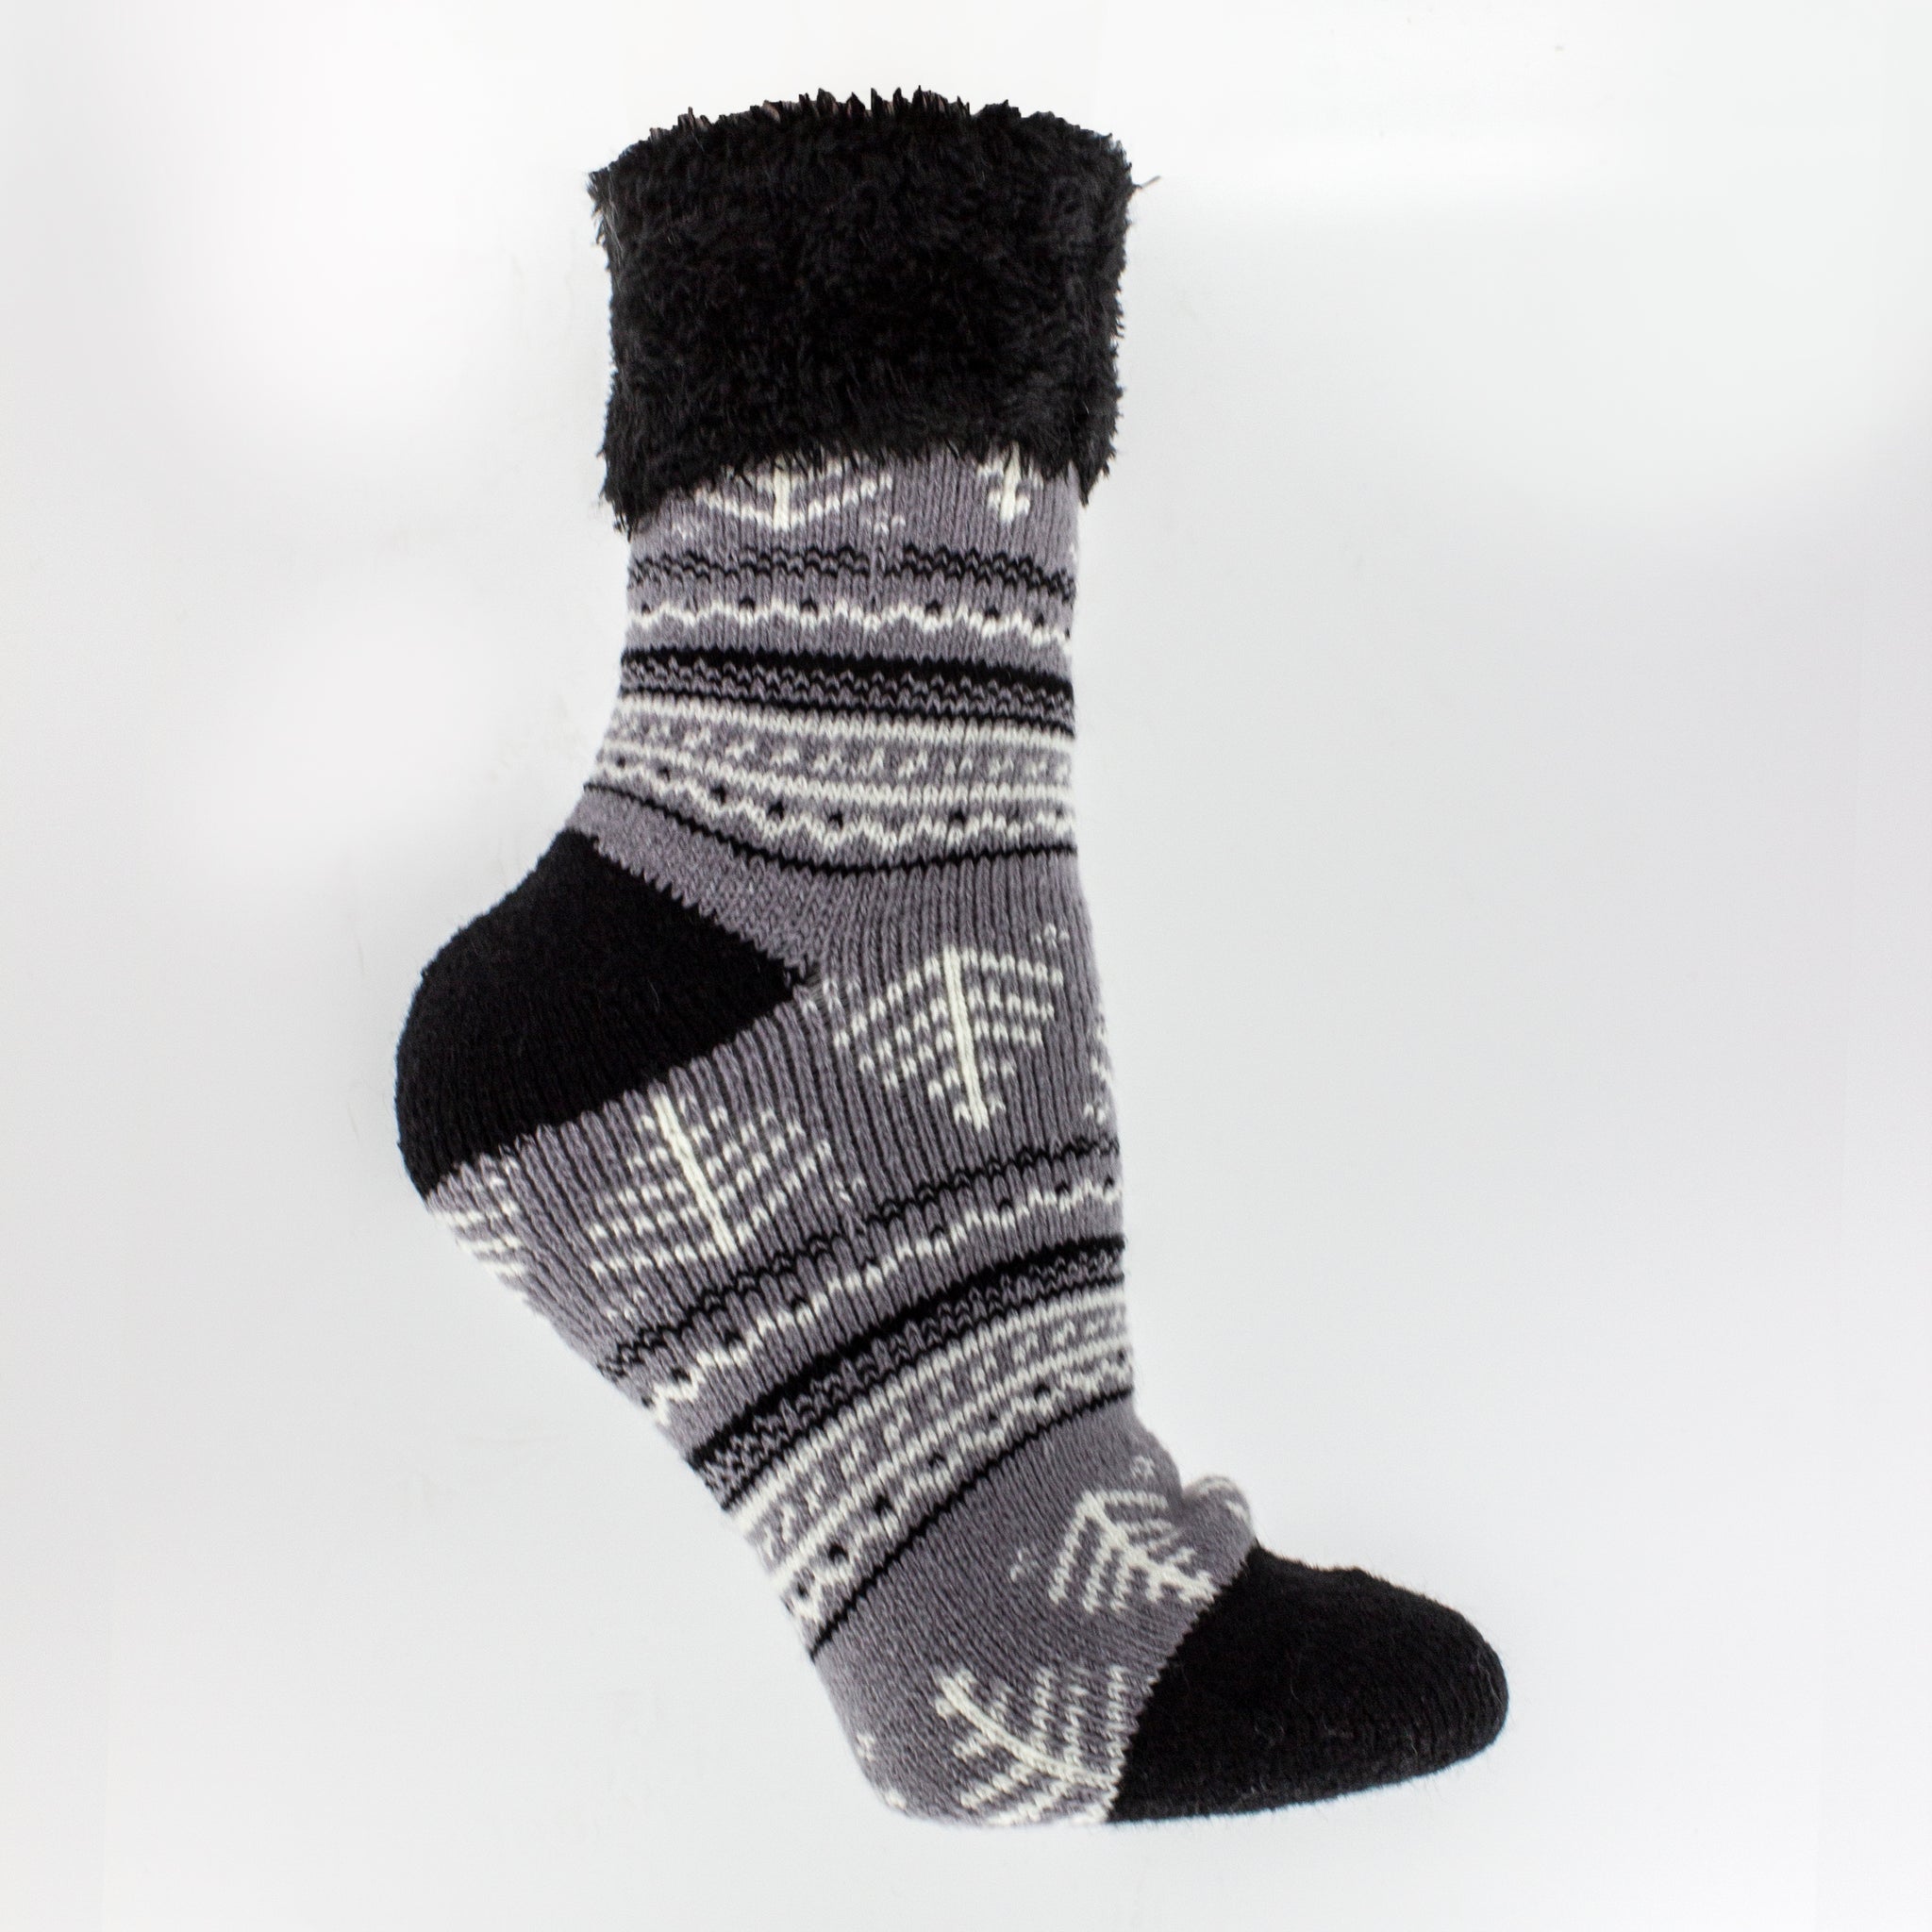 All Socks MinxNY  Essential Oil Infused Slipper Socks, Spa & Beauty  Accessories